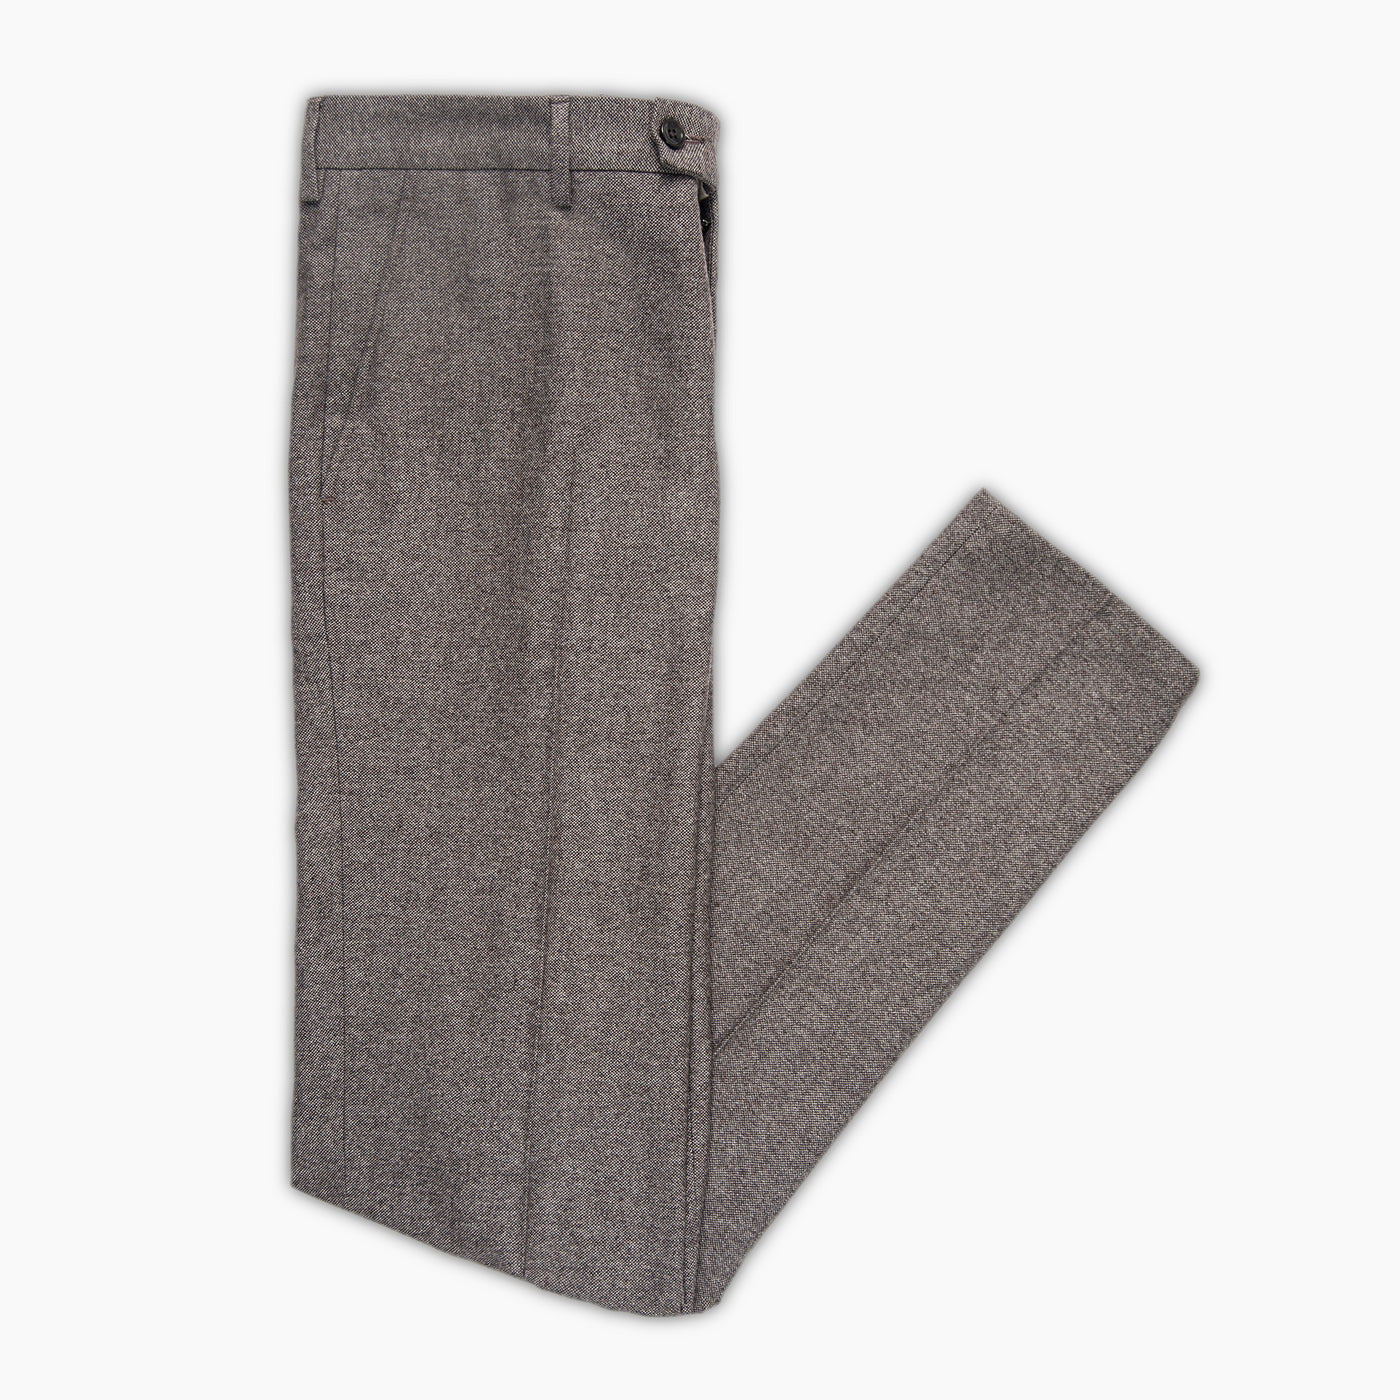 Boris Chino Pants Heritage Tweed wool cotton cashmere stretch